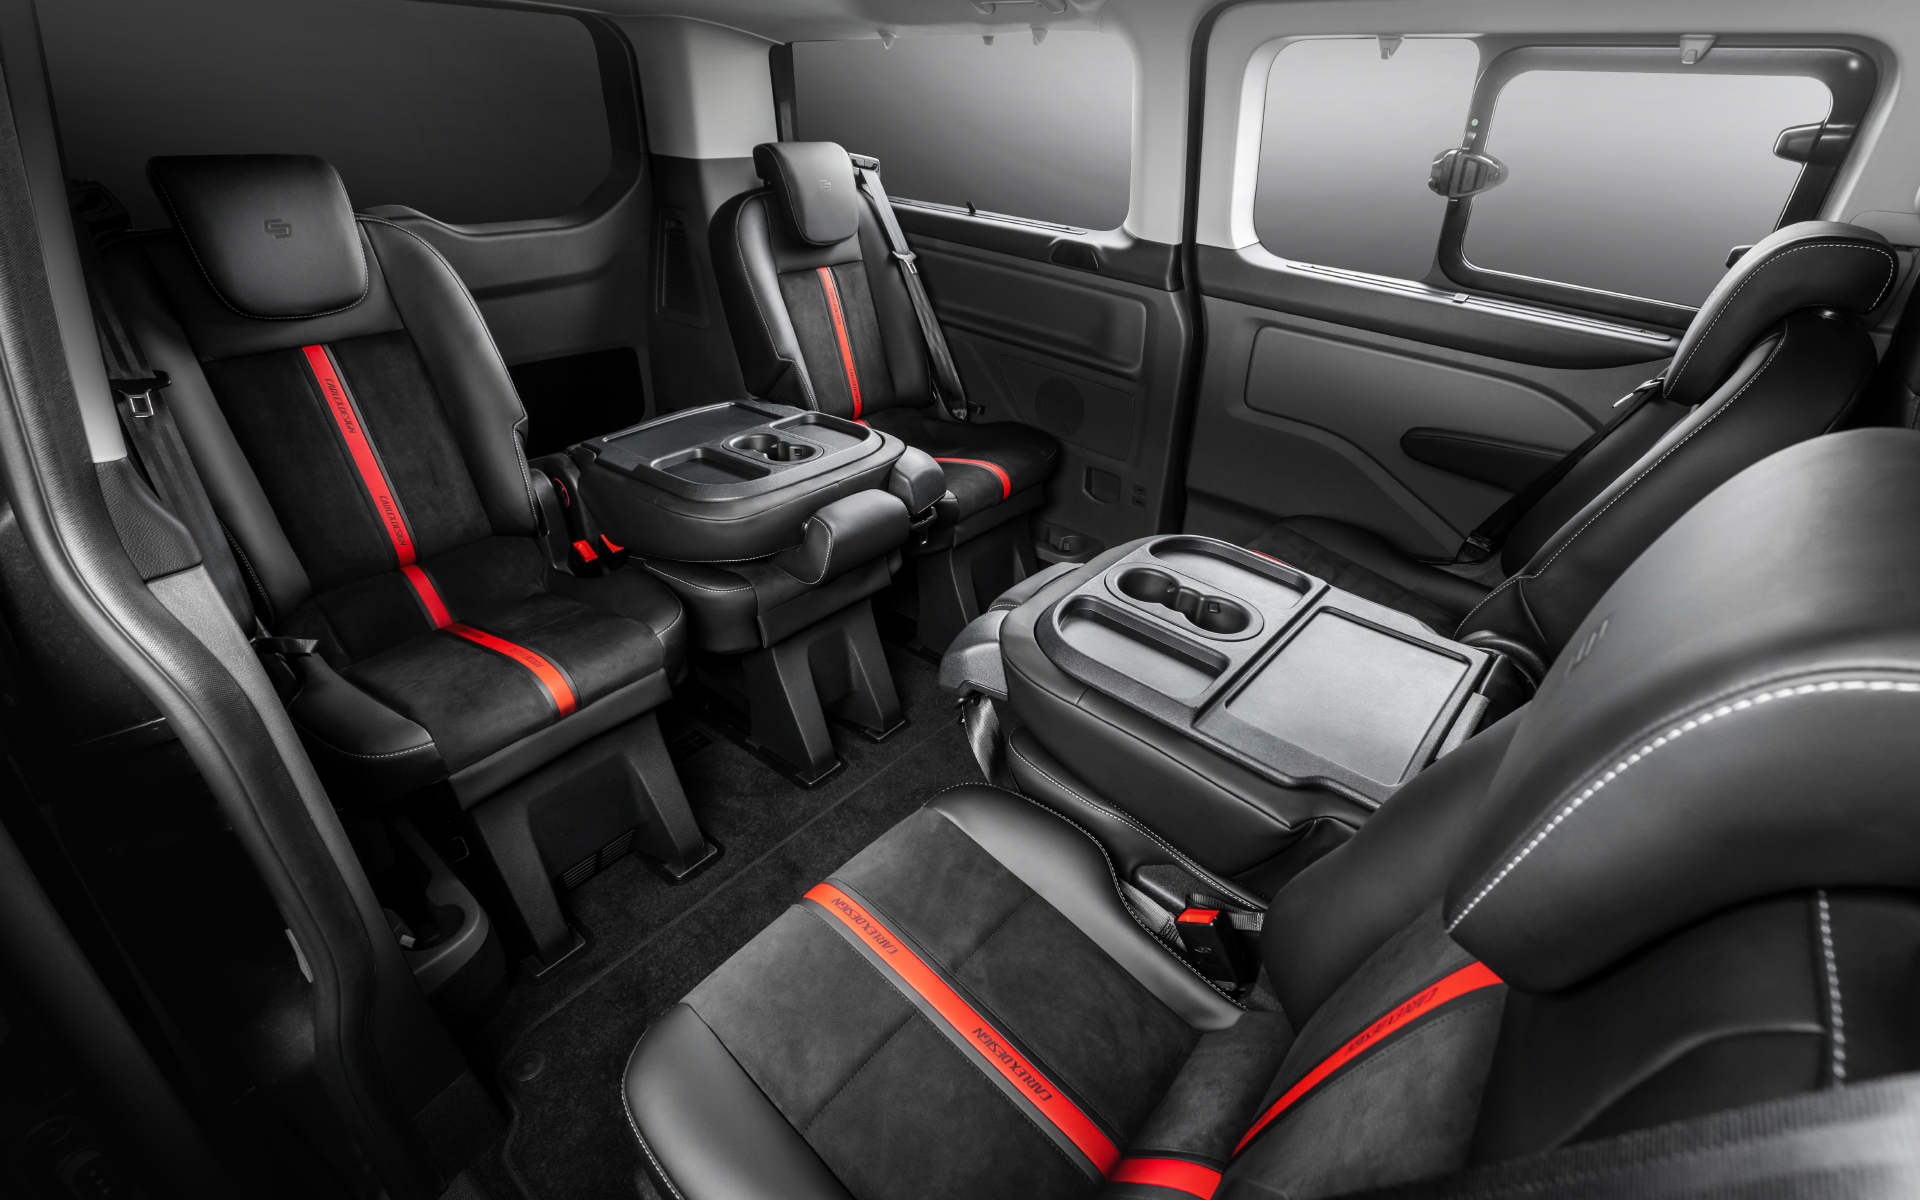 Ford Tourneo Custom X Final Edition - styling, Transit body kit - Carlex  Design